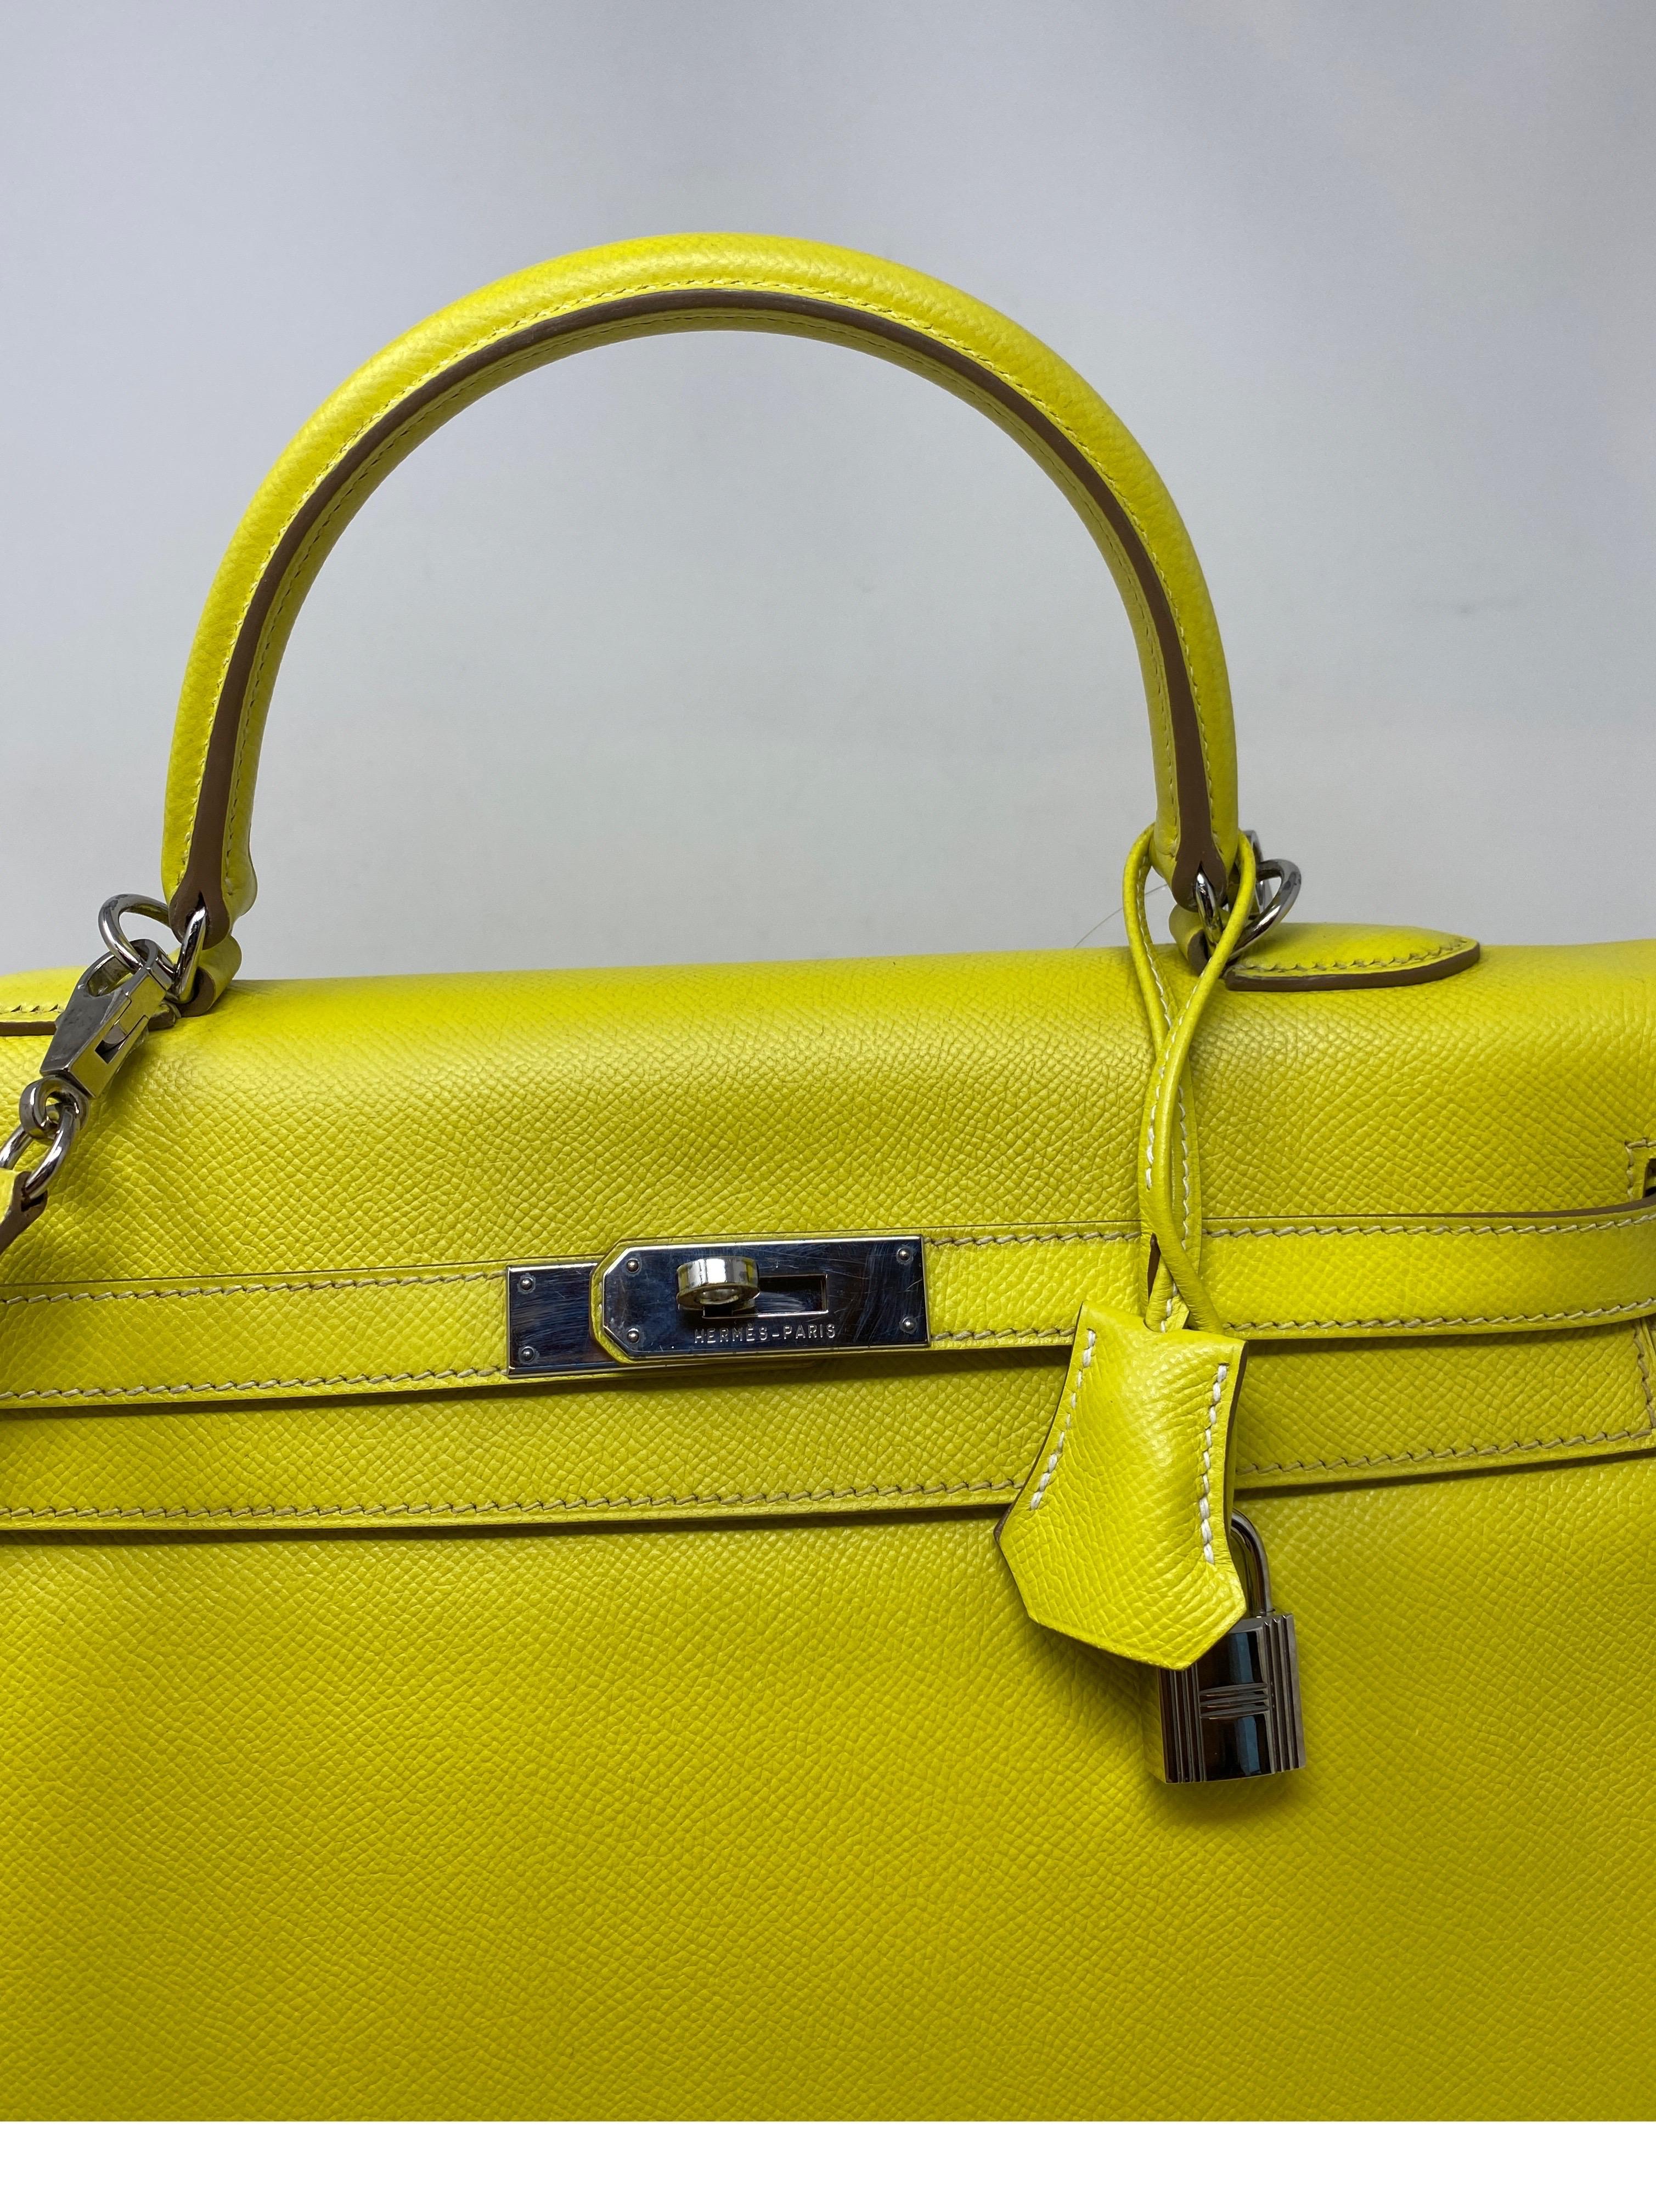 Hermes Yellow 35 Kelly Bag  3